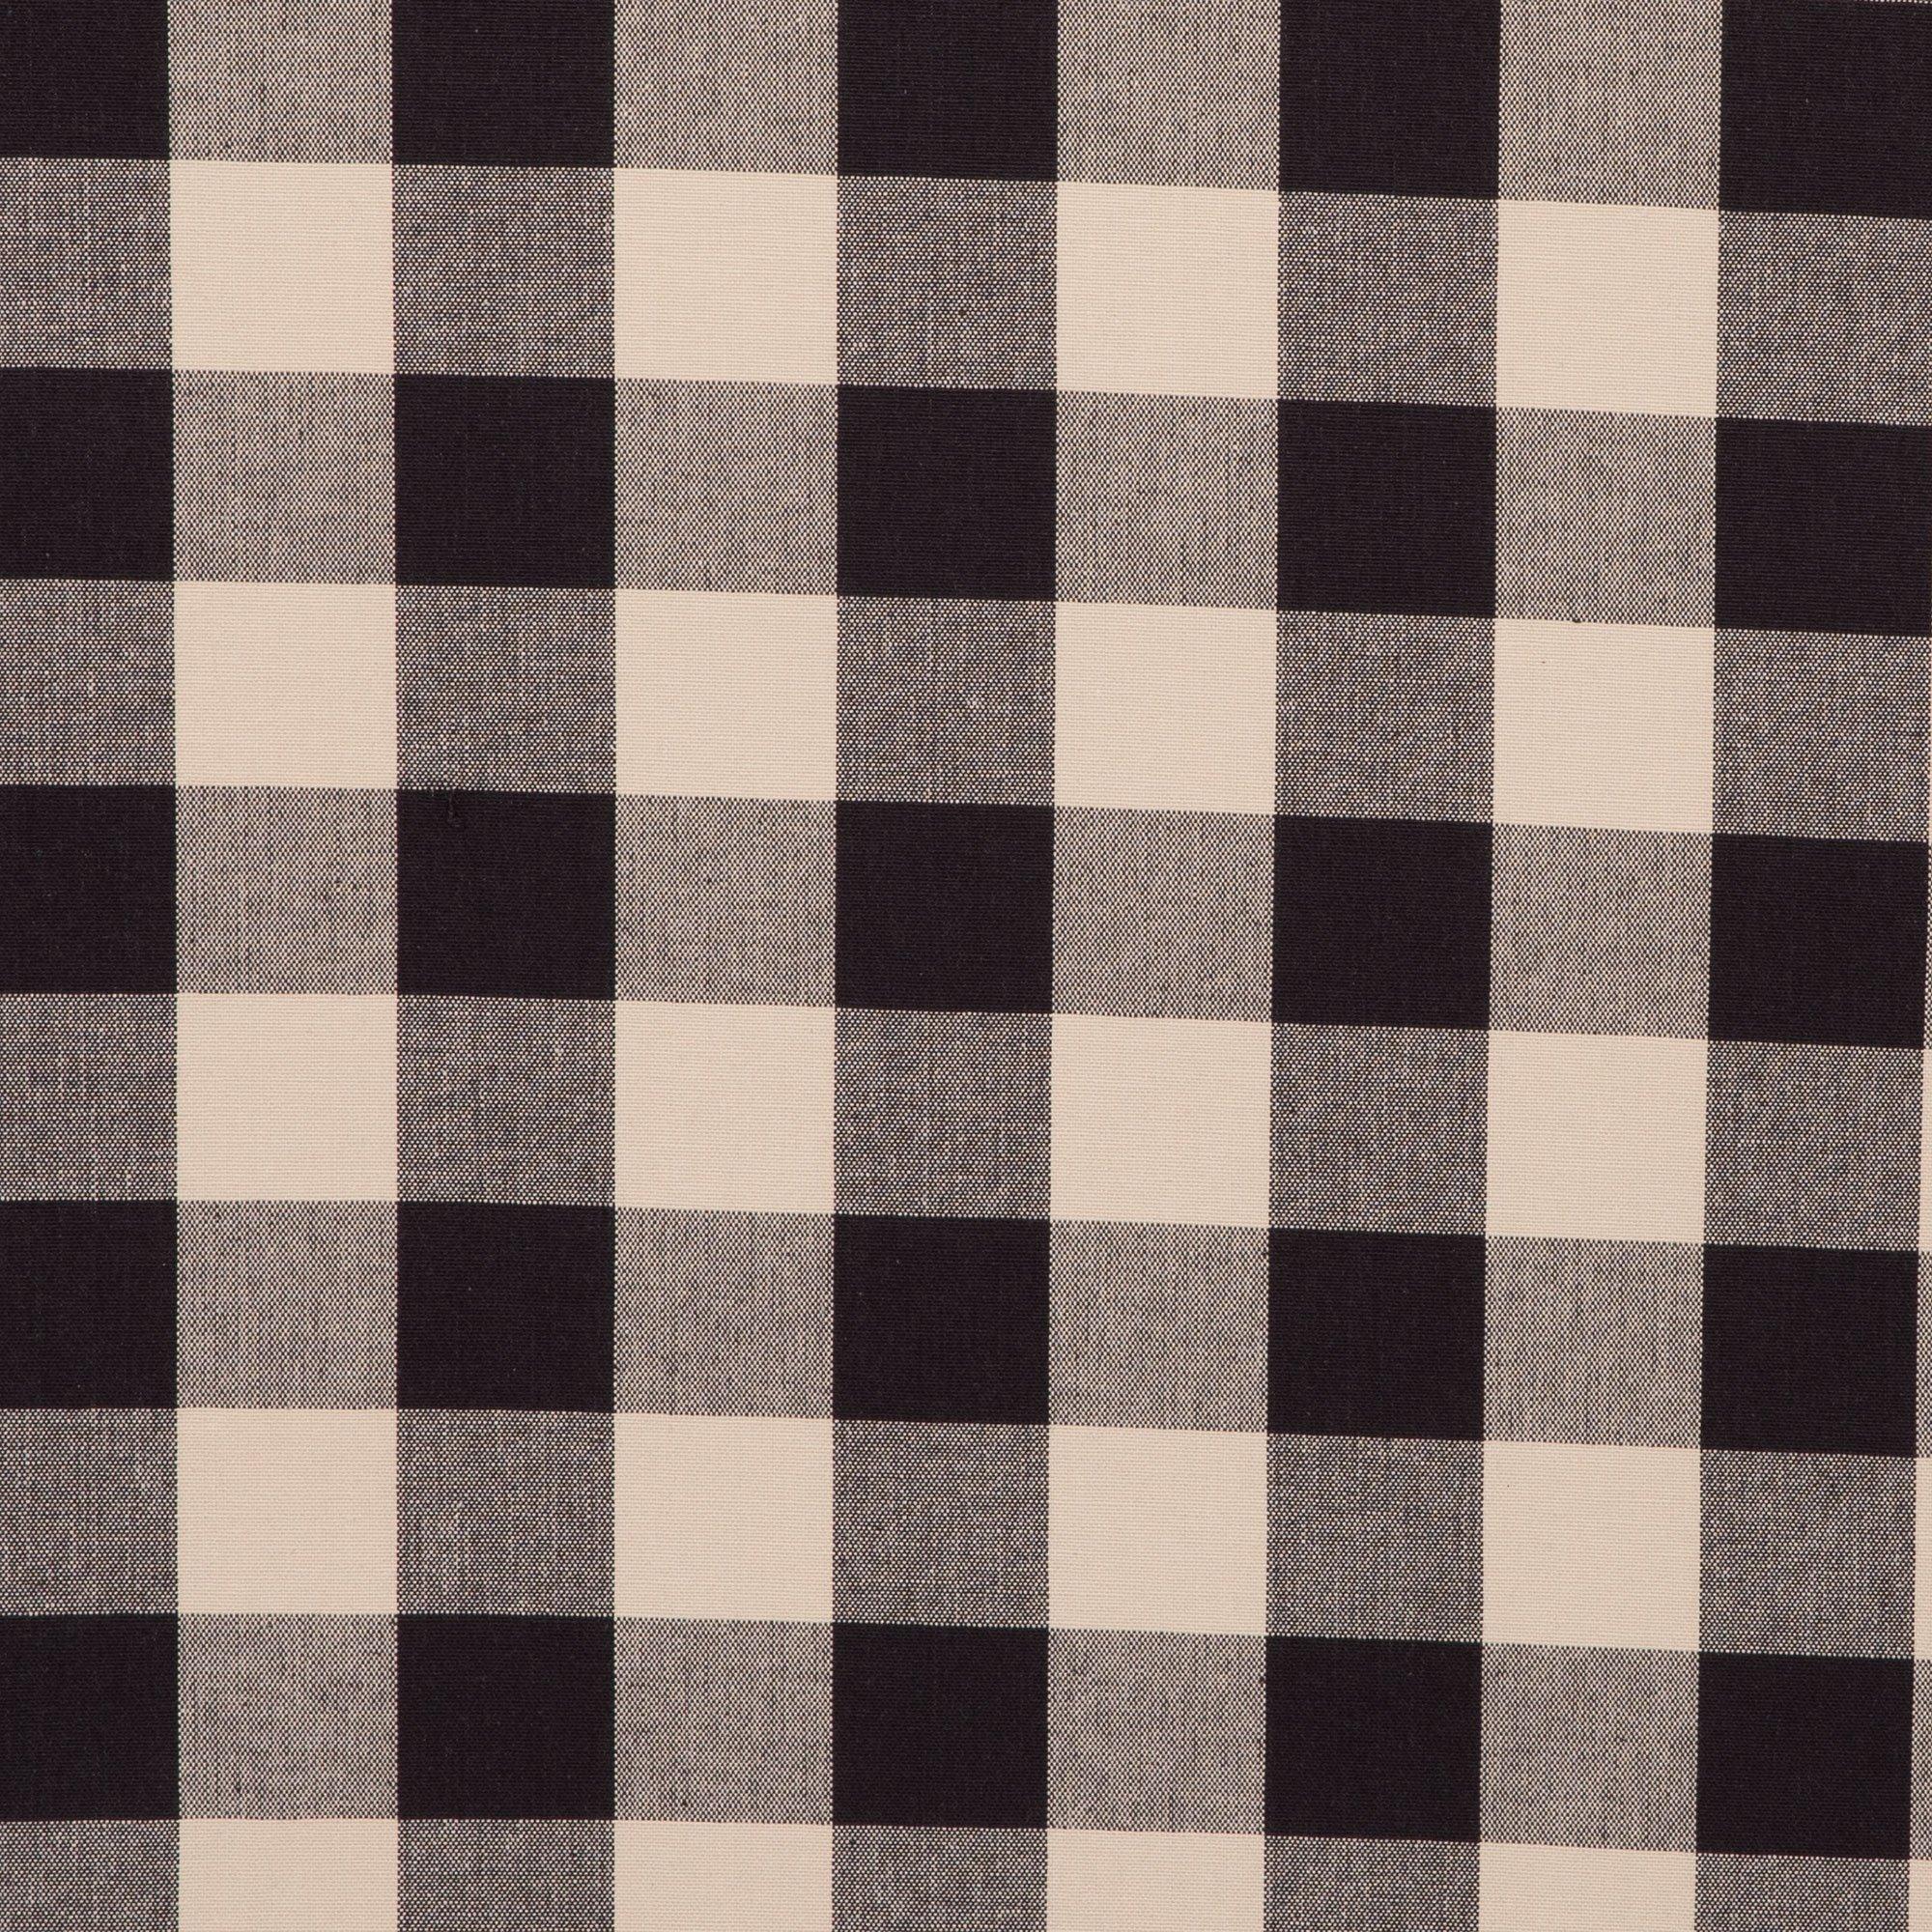 Black & Tan Homespun Check Cotton Fabric, Hobby Lobby